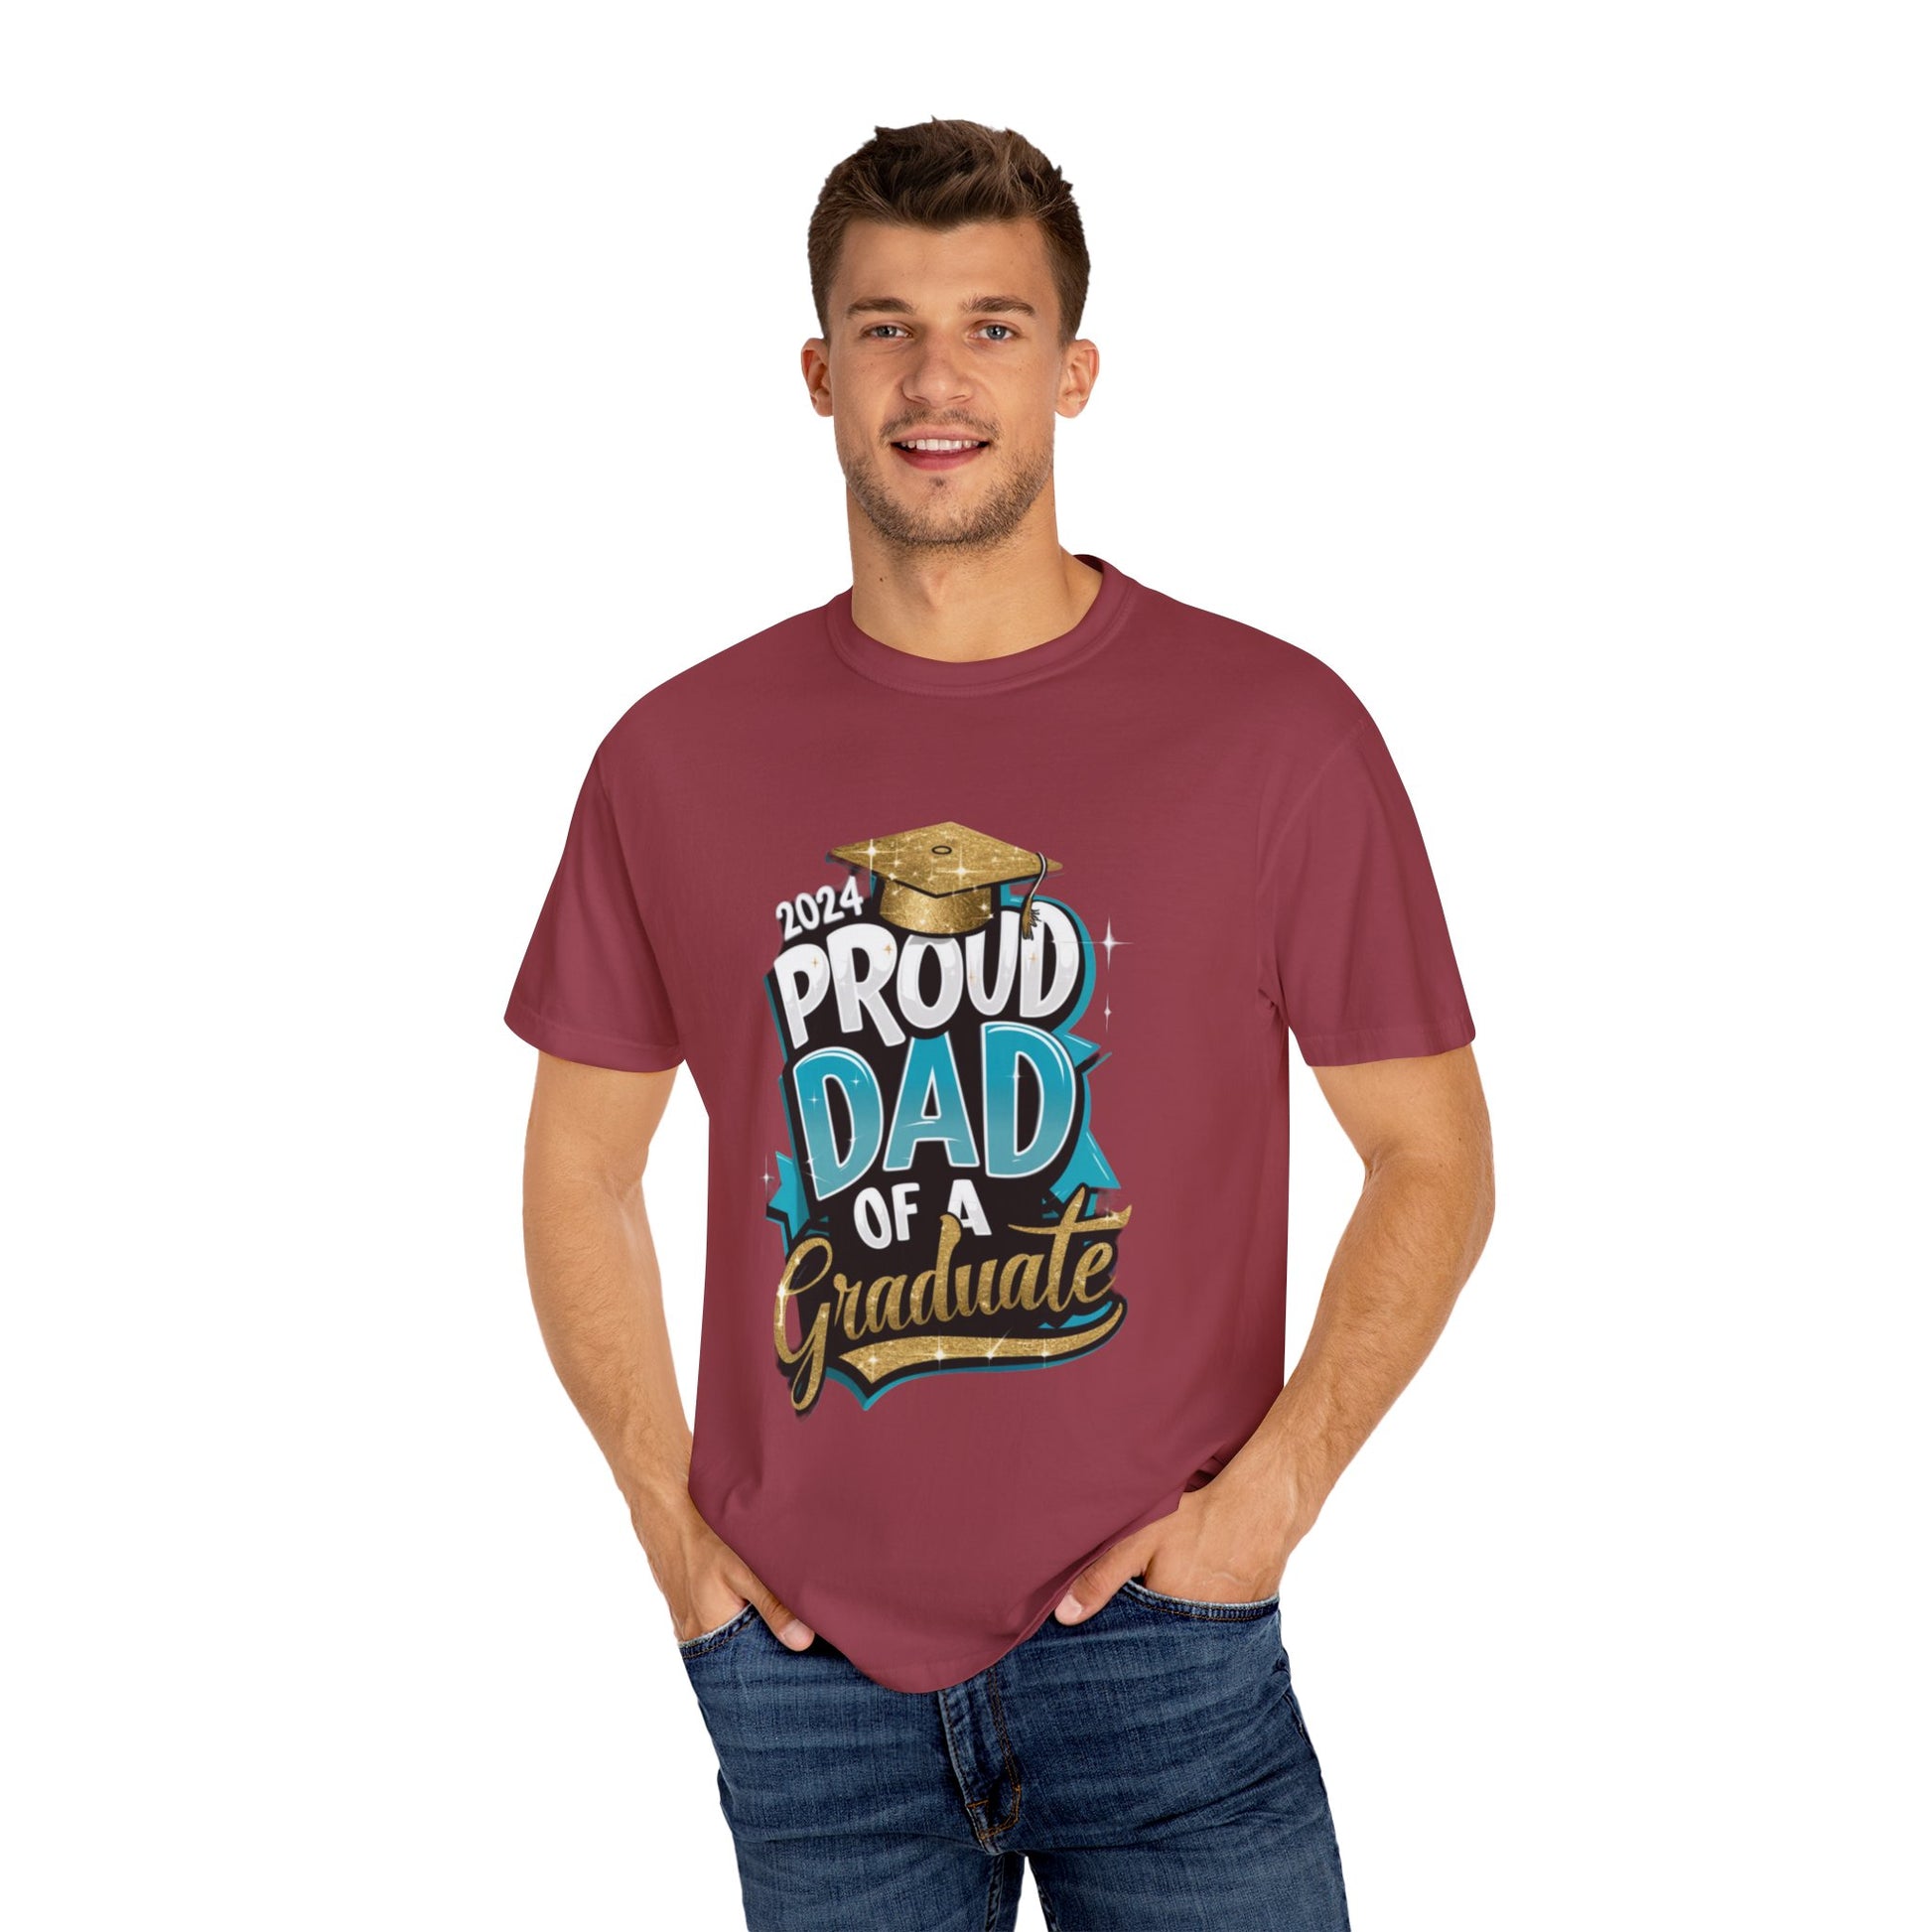 Proud Dad of a 2024 Graduate Unisex Garment-dyed T-shirt Cotton Funny Humorous Graphic Soft Premium Unisex Men Women Chili T-shirt Birthday Gift-36